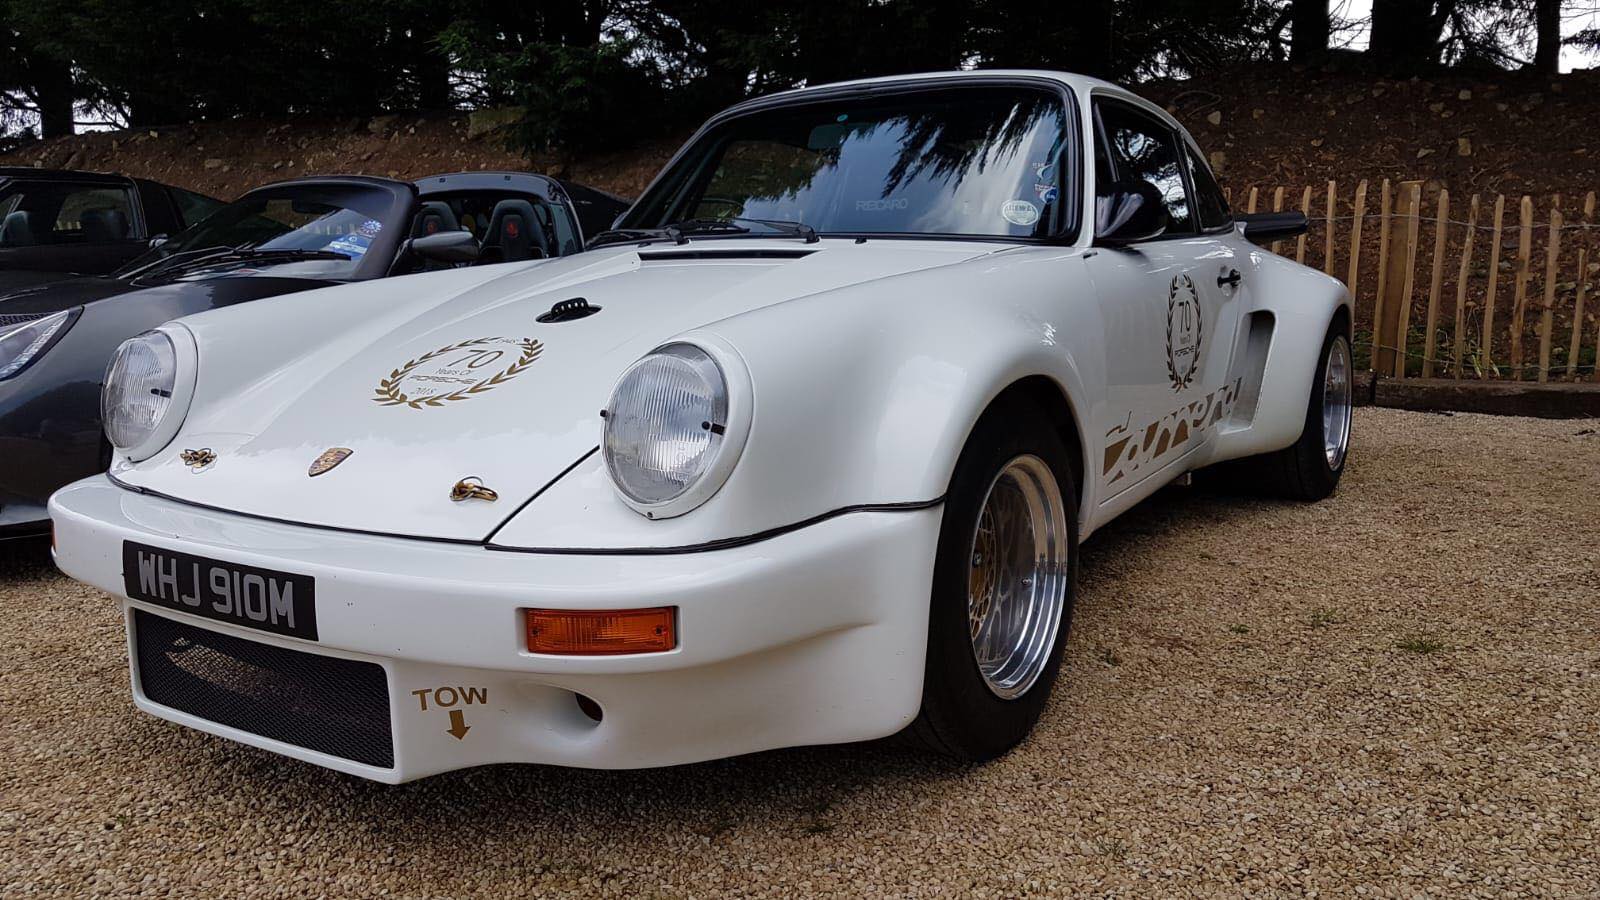 Porsche's 70th anniversary